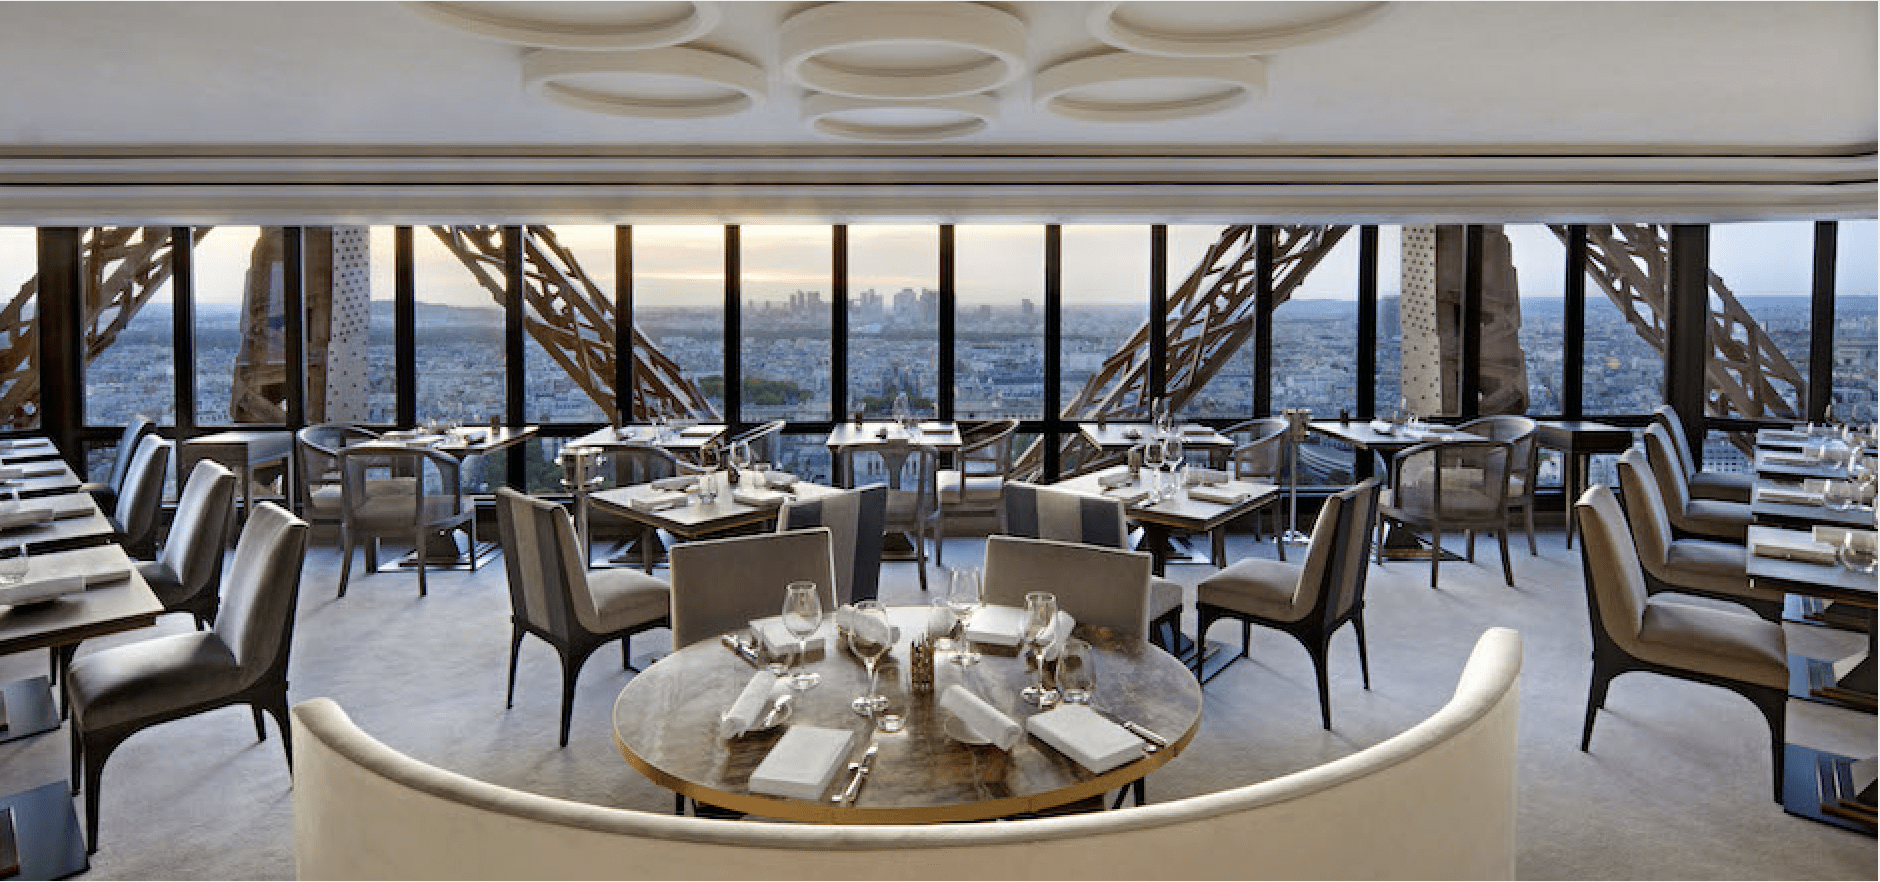 Paris Late Lunch at Eiffel Tower's Madame Brasserie Restaurant